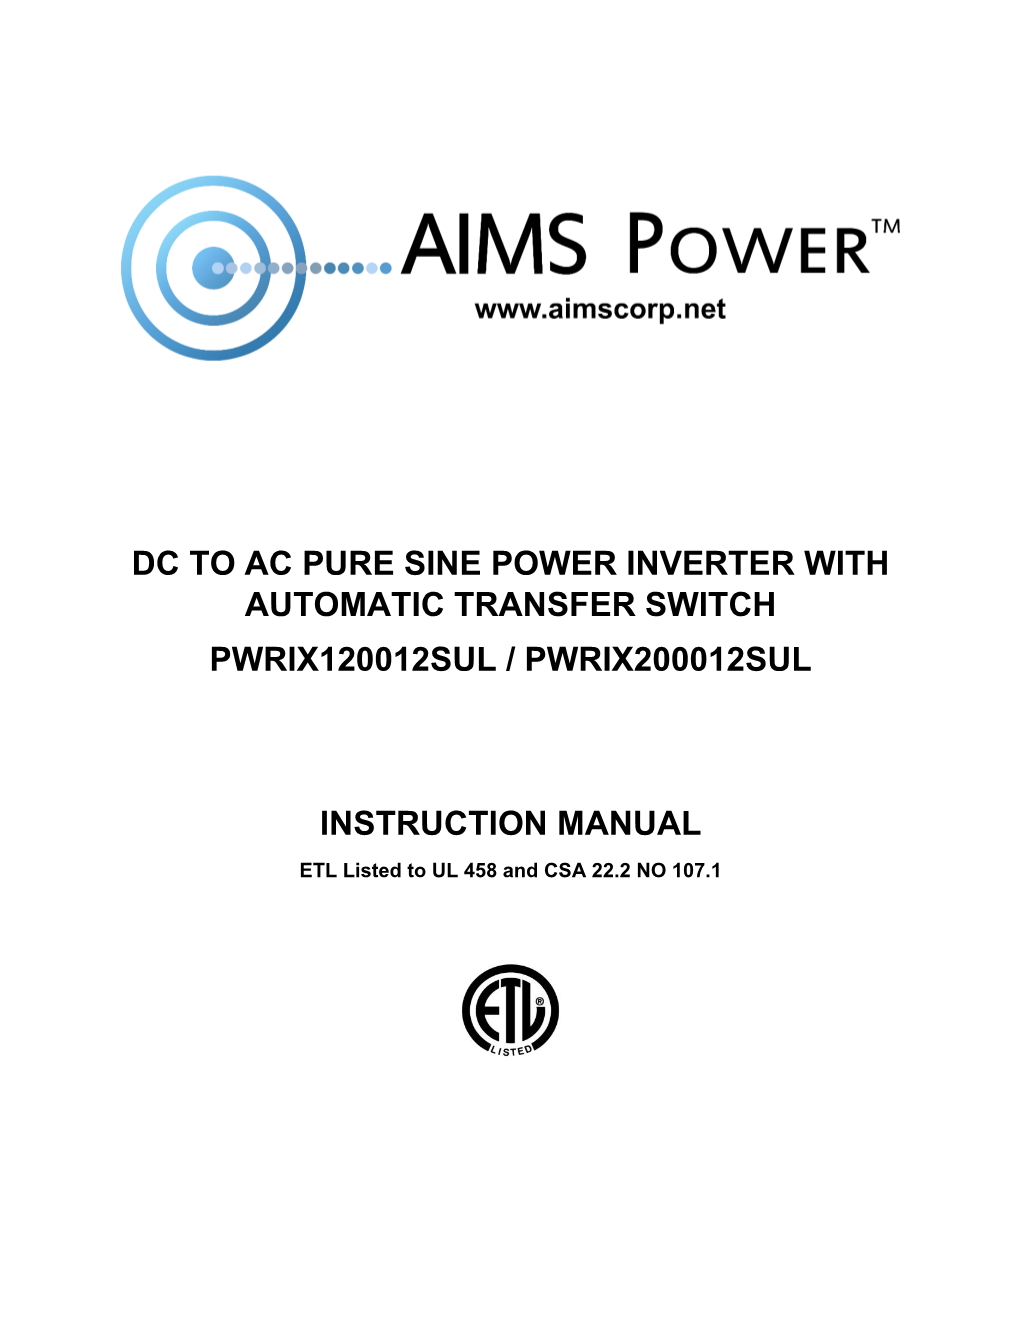 Dc to Ac Pure Sine Power Inverter with Automatic Transfer Switch Pwrix120012sul / Pwrix200012sul